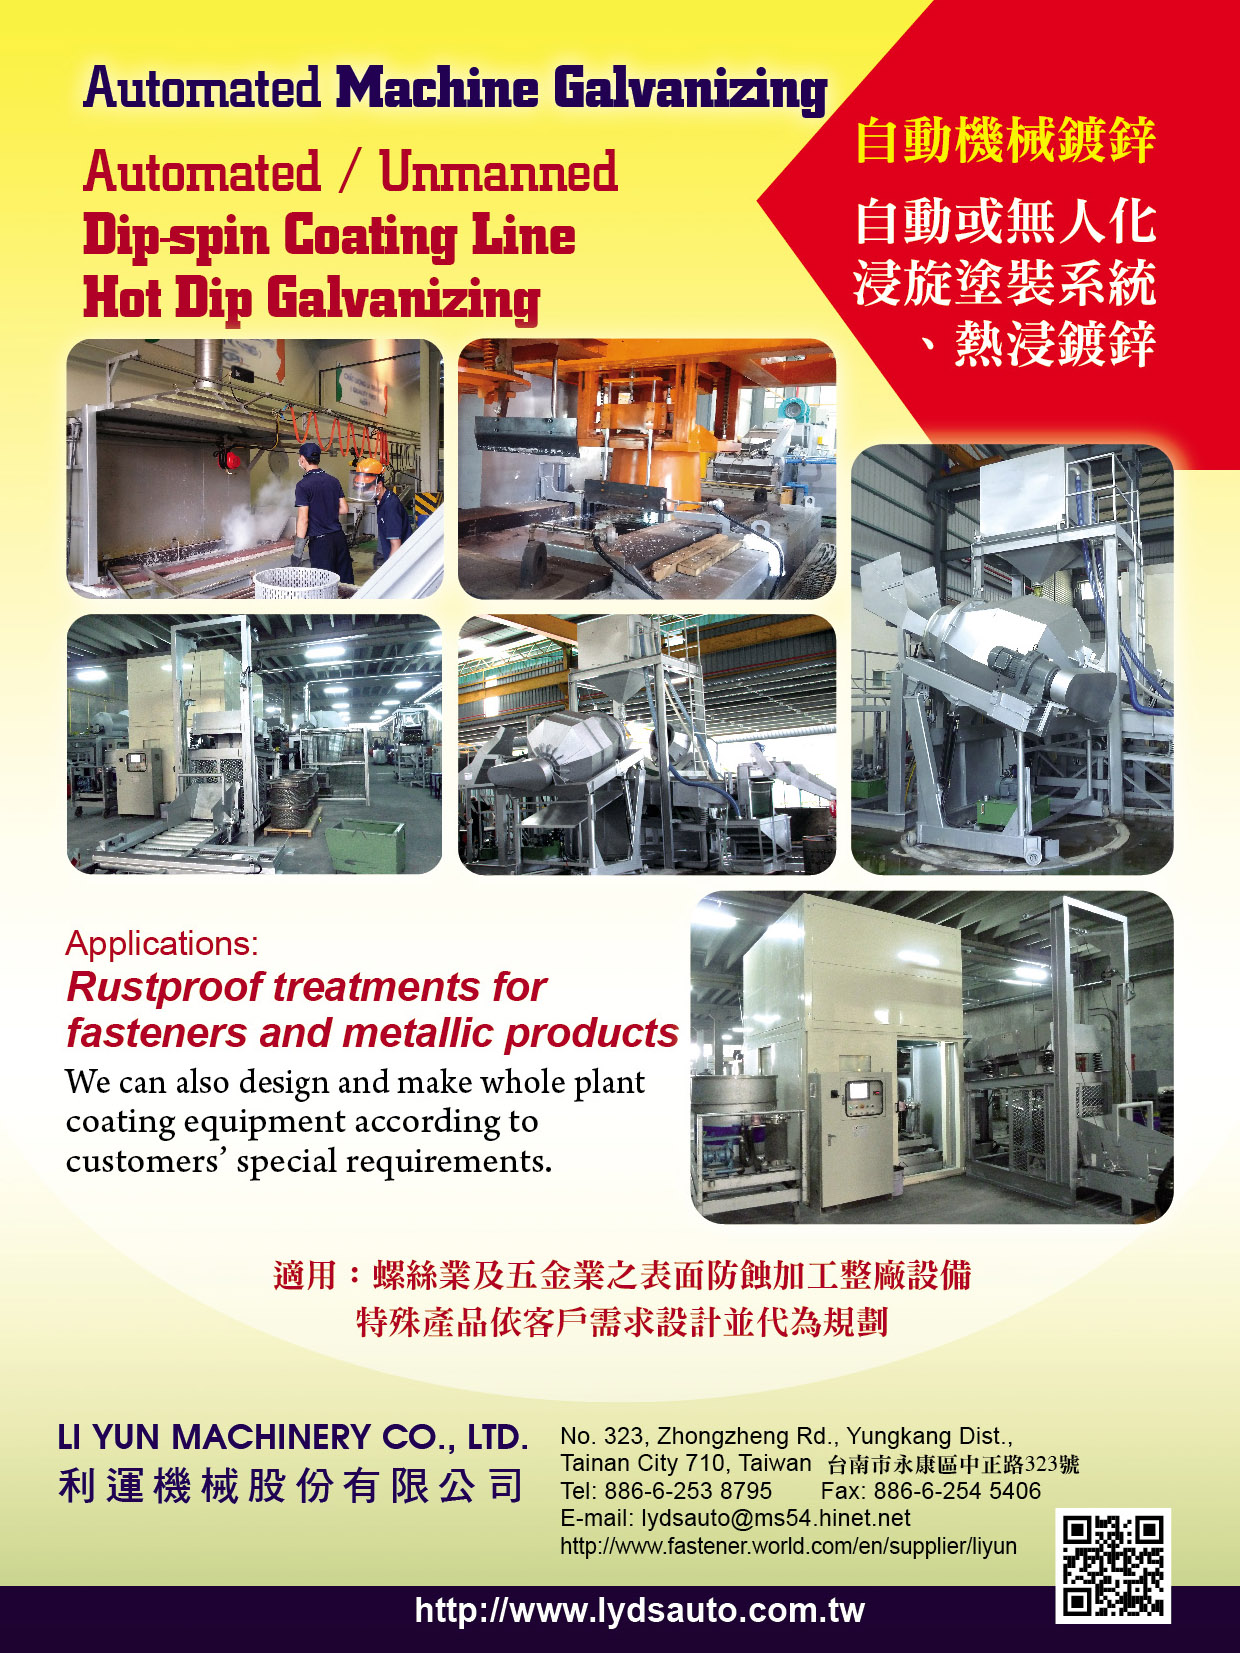 LI YUN MACHINERY CO., LTD. , Automatic Machine Galvanizing, Automated / Unmanned Dip-spin Coating Line, Hot Dip Galvanizing